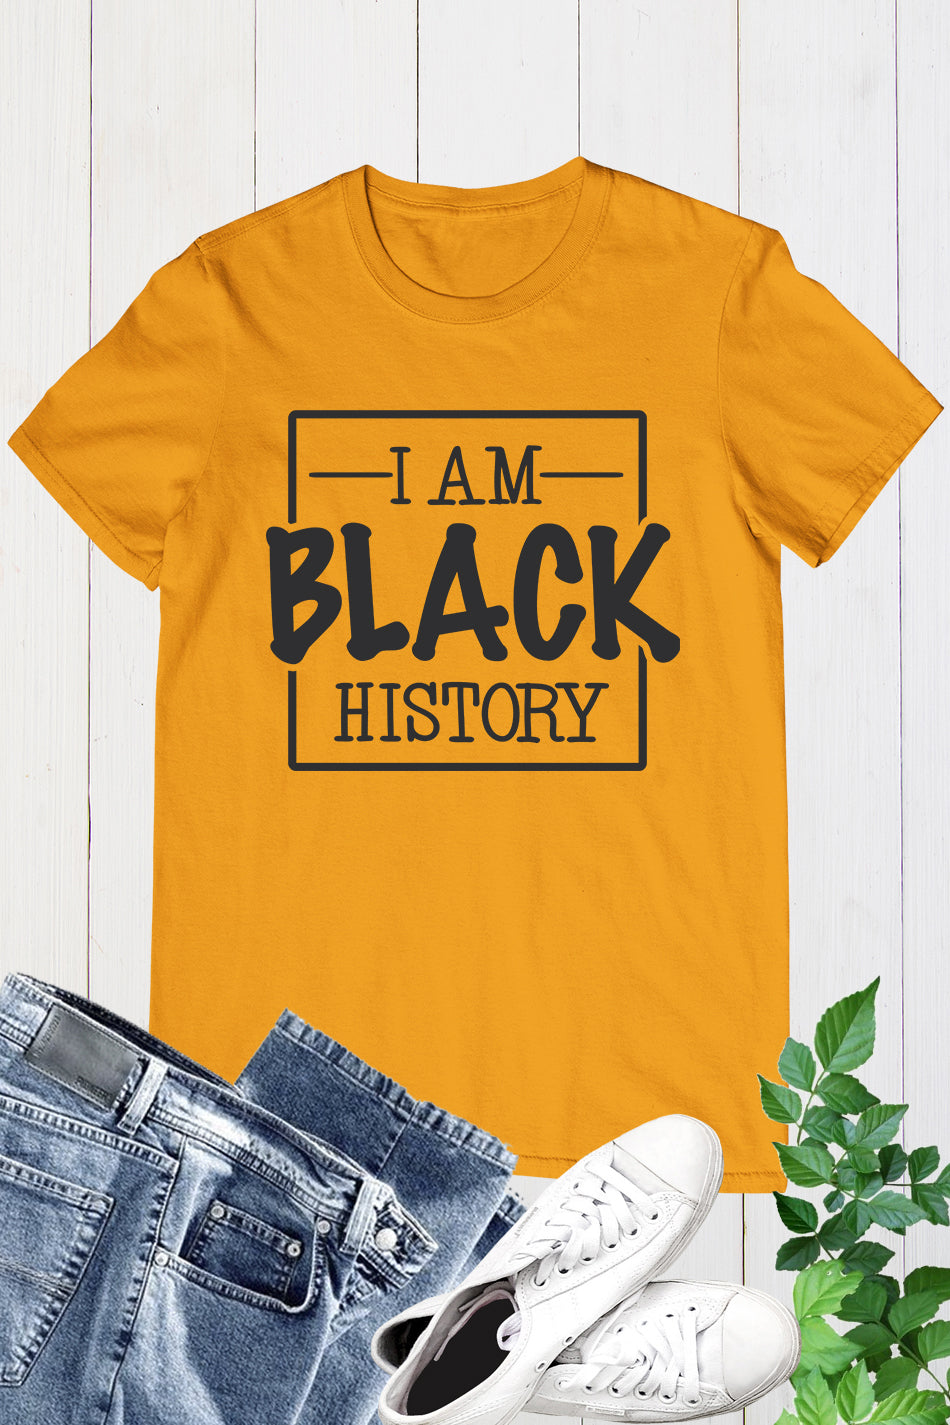 I am Black History tee Shirt